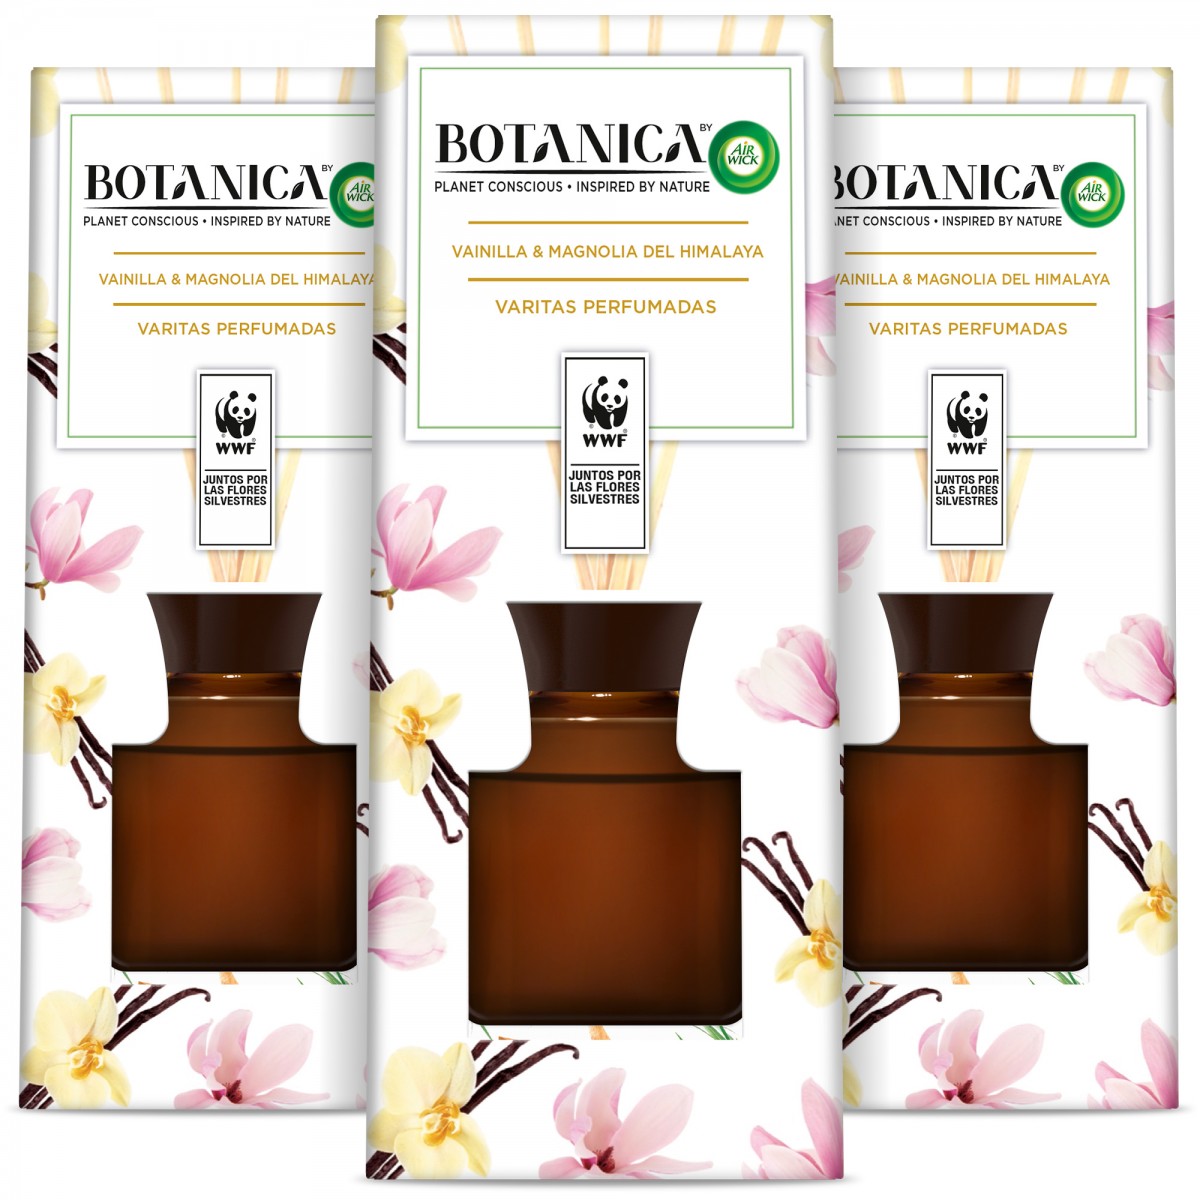 Air Wick - Botanica by Air Wick Pack x3 Varitas perfumadas, aroma Vainilla y Magnolia del Himalaya - 80ml